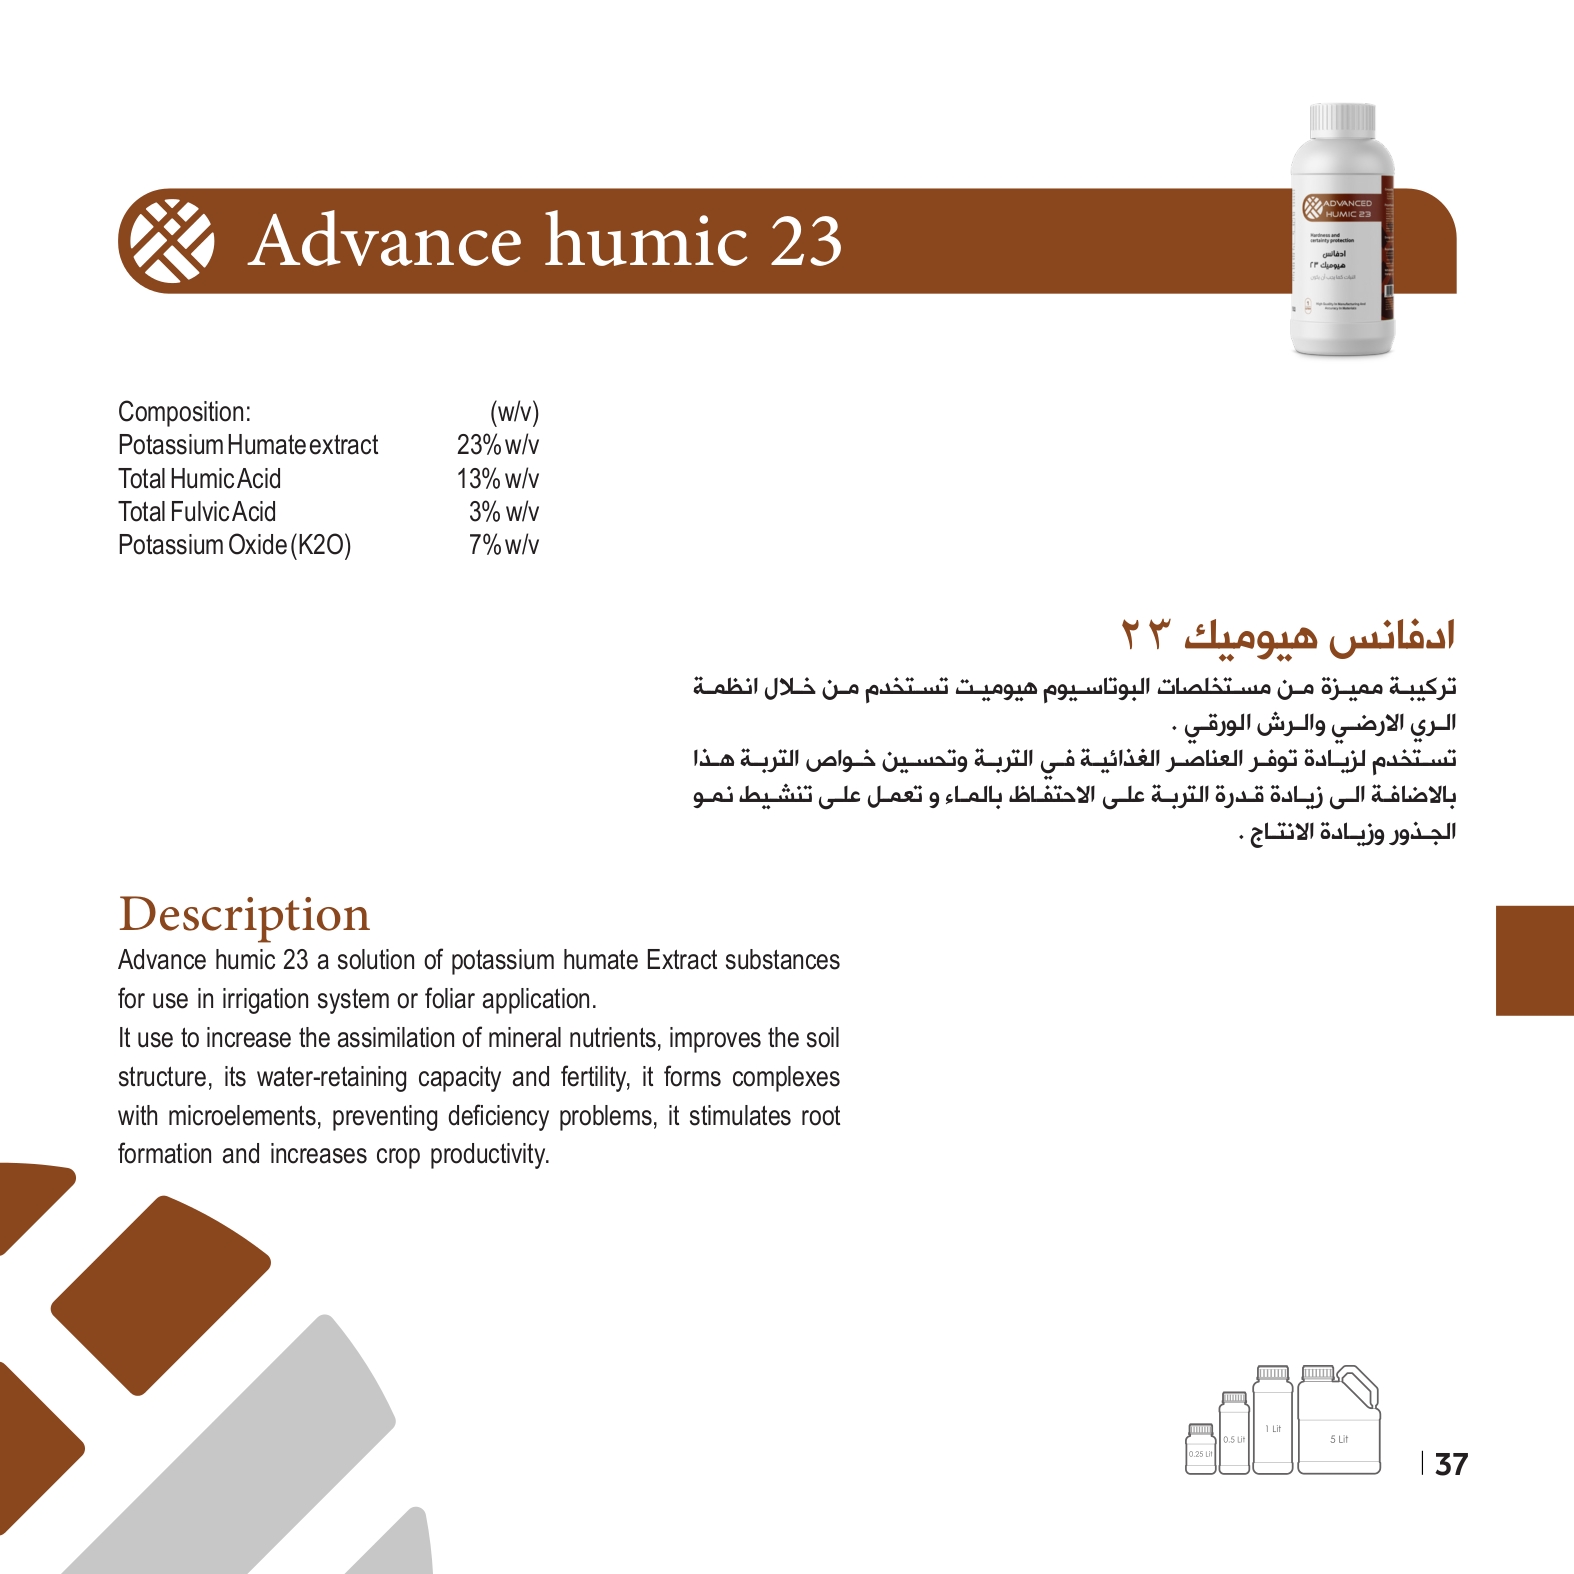 Advance humic 23